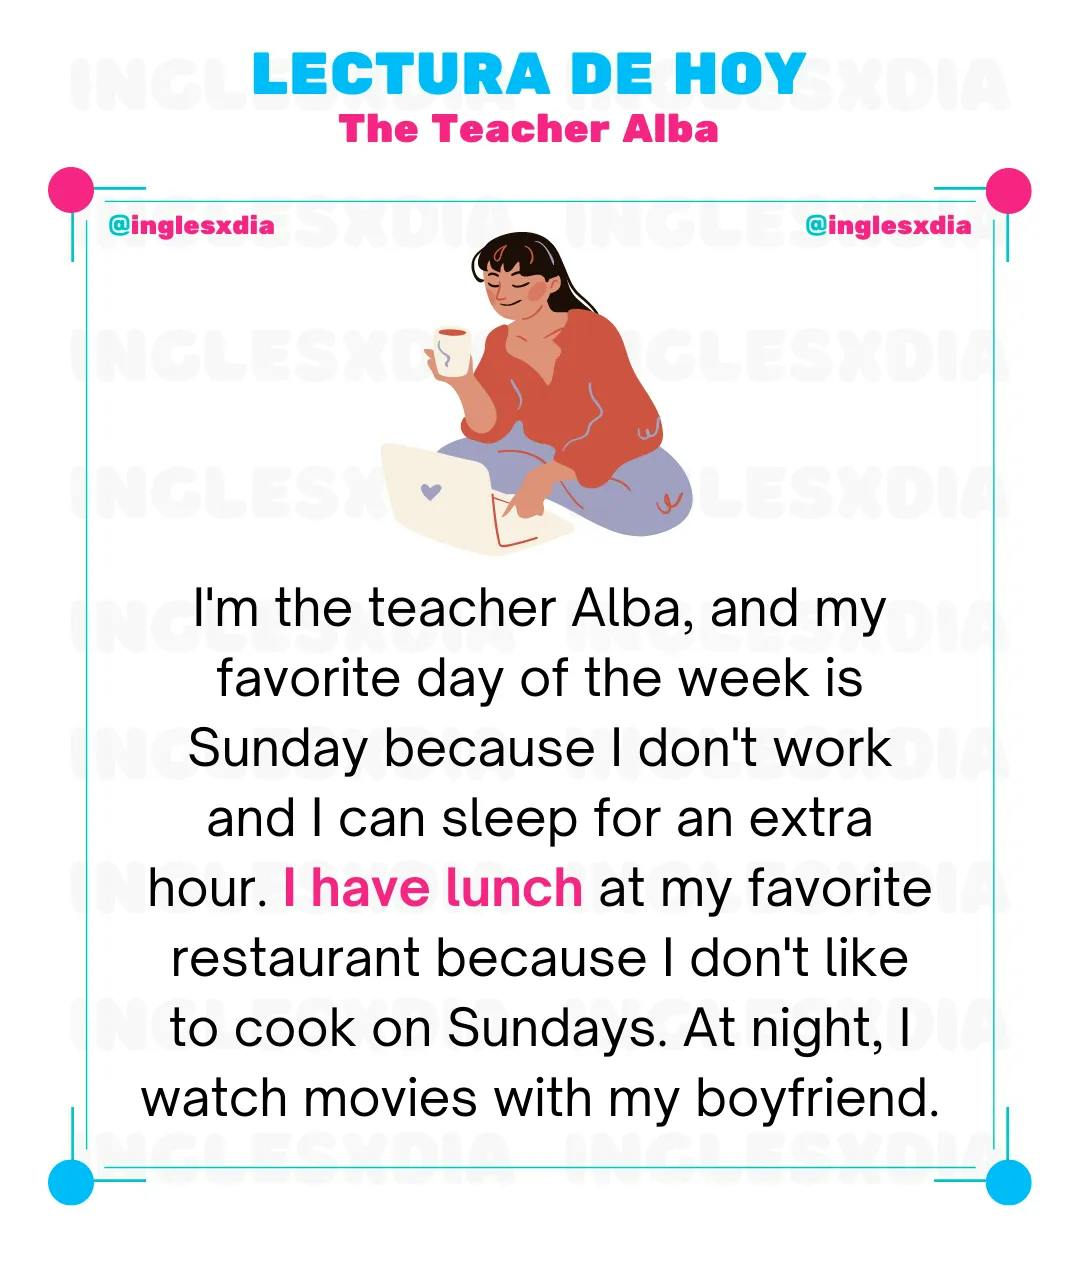 The Teacher Alba